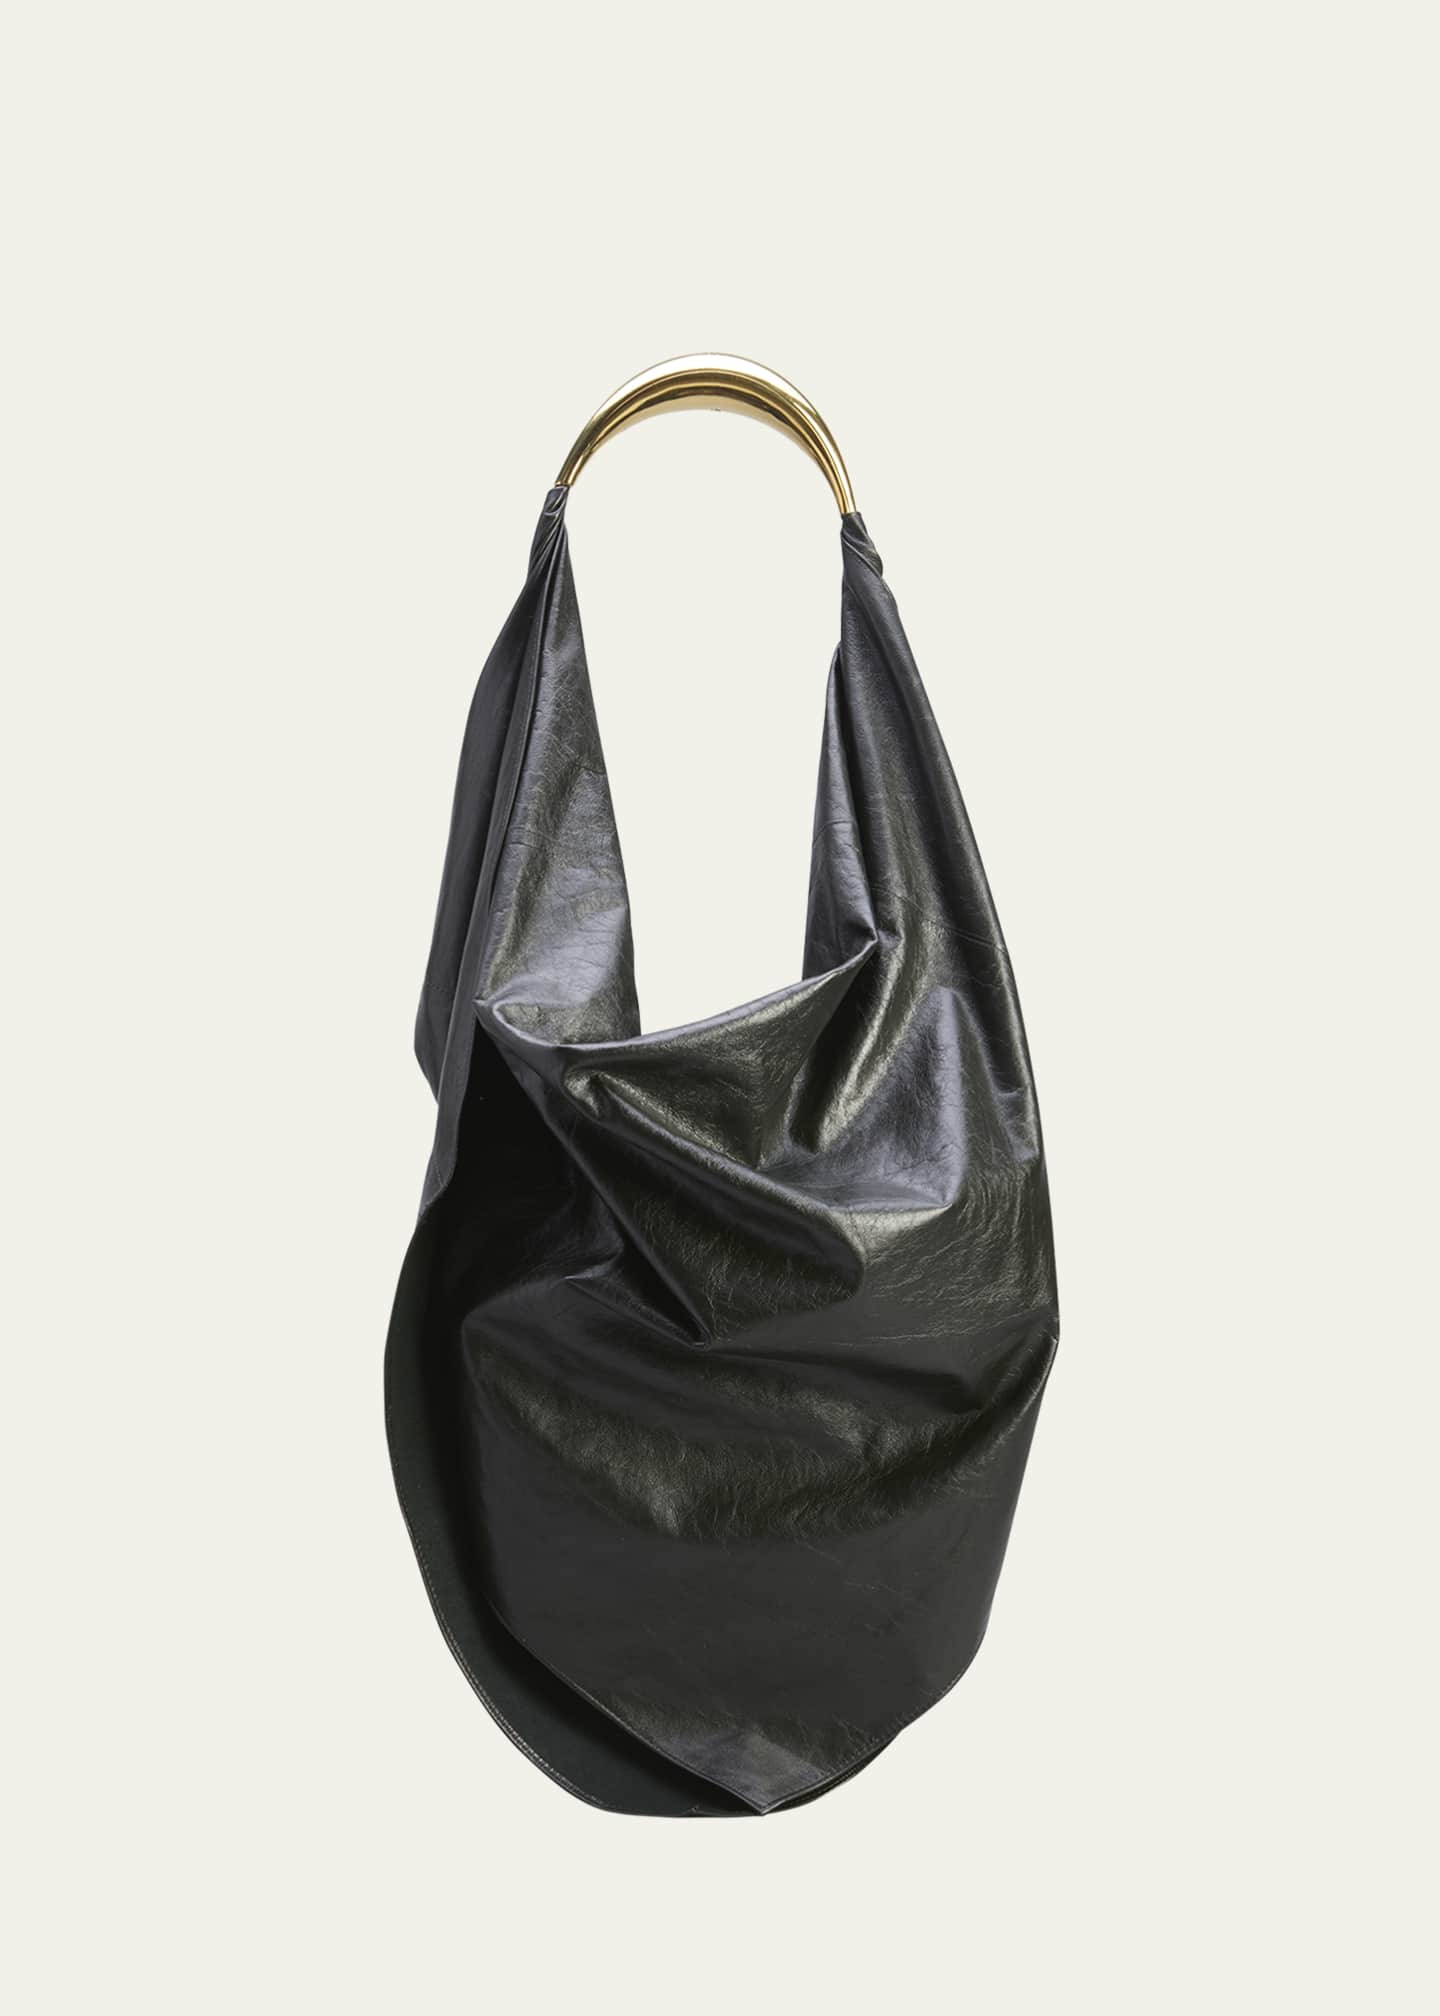 Slouchy Tote BLACK Shoulder Bag Hobo Leather Bag Weekender 